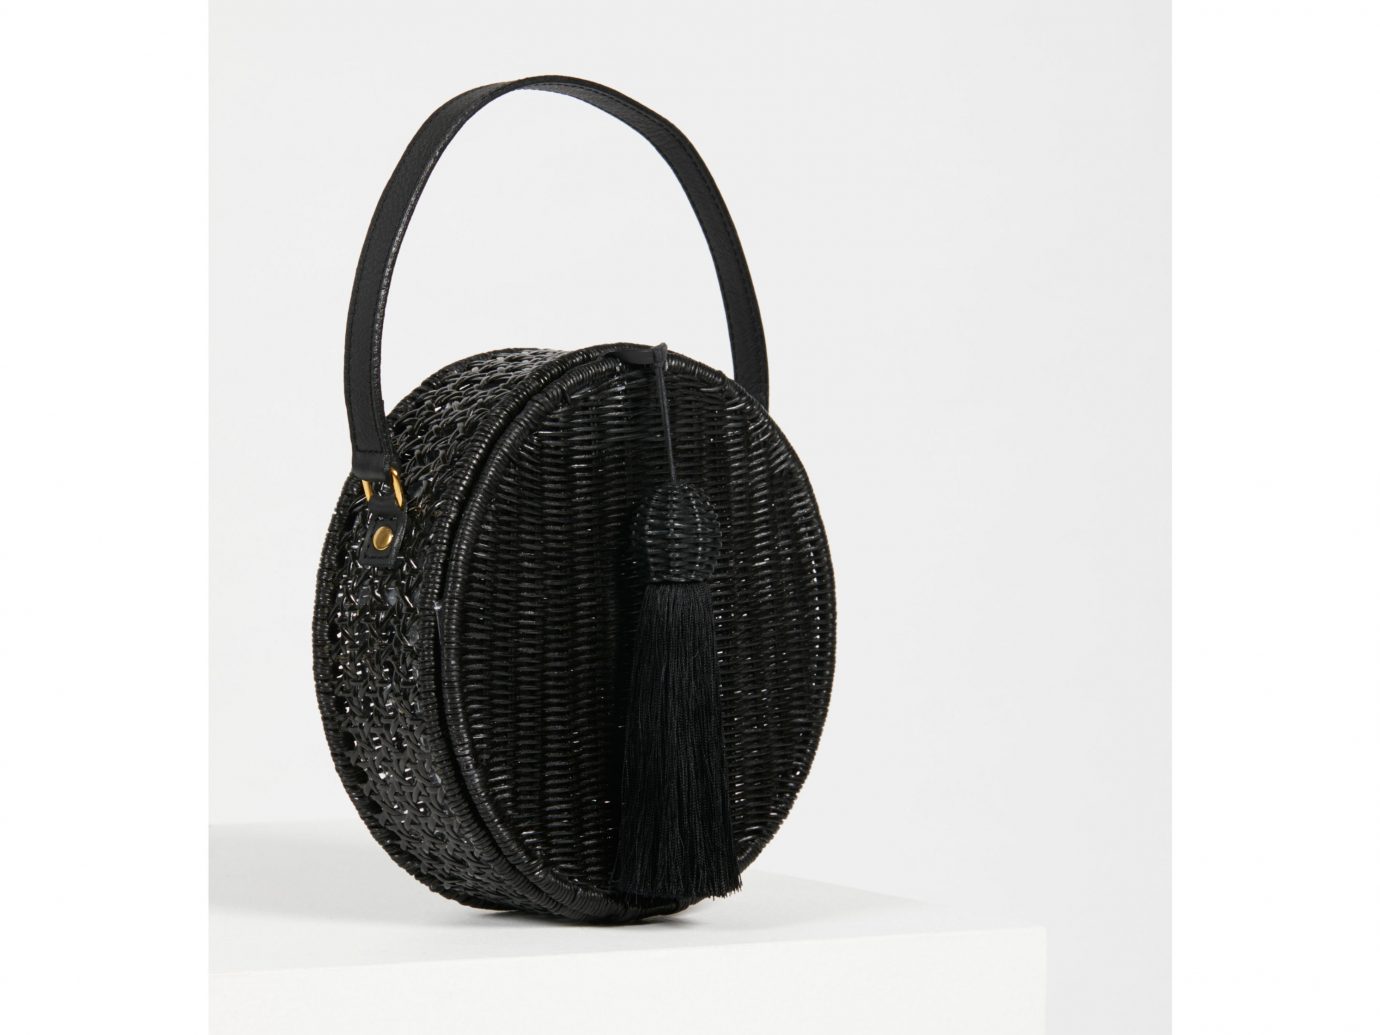 Style + Design bag handbag product black product design shoulder bag leather audio equipment audio